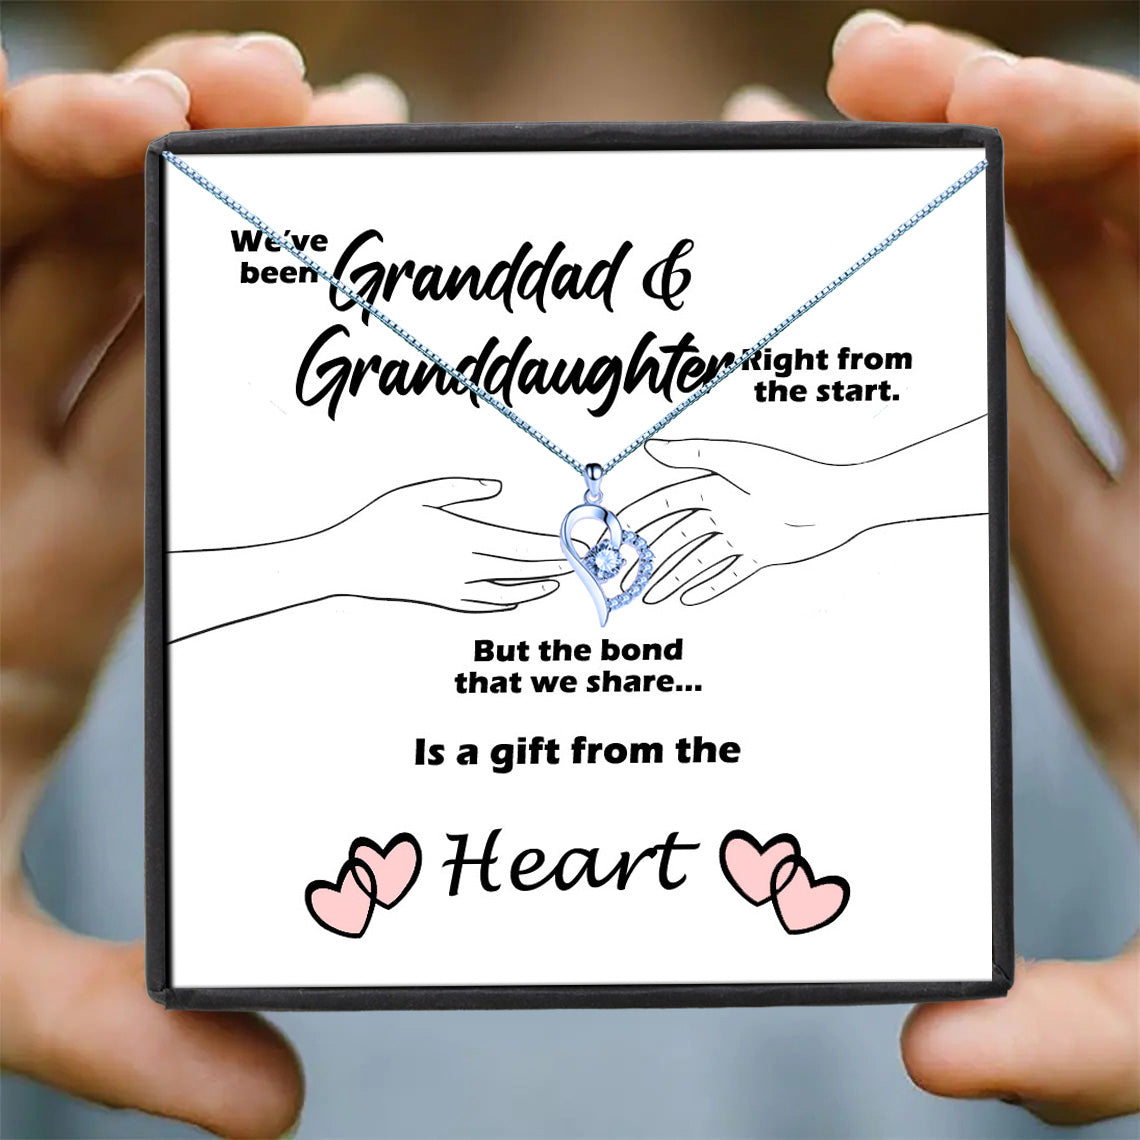 Granddaughter Bond Message Necklace